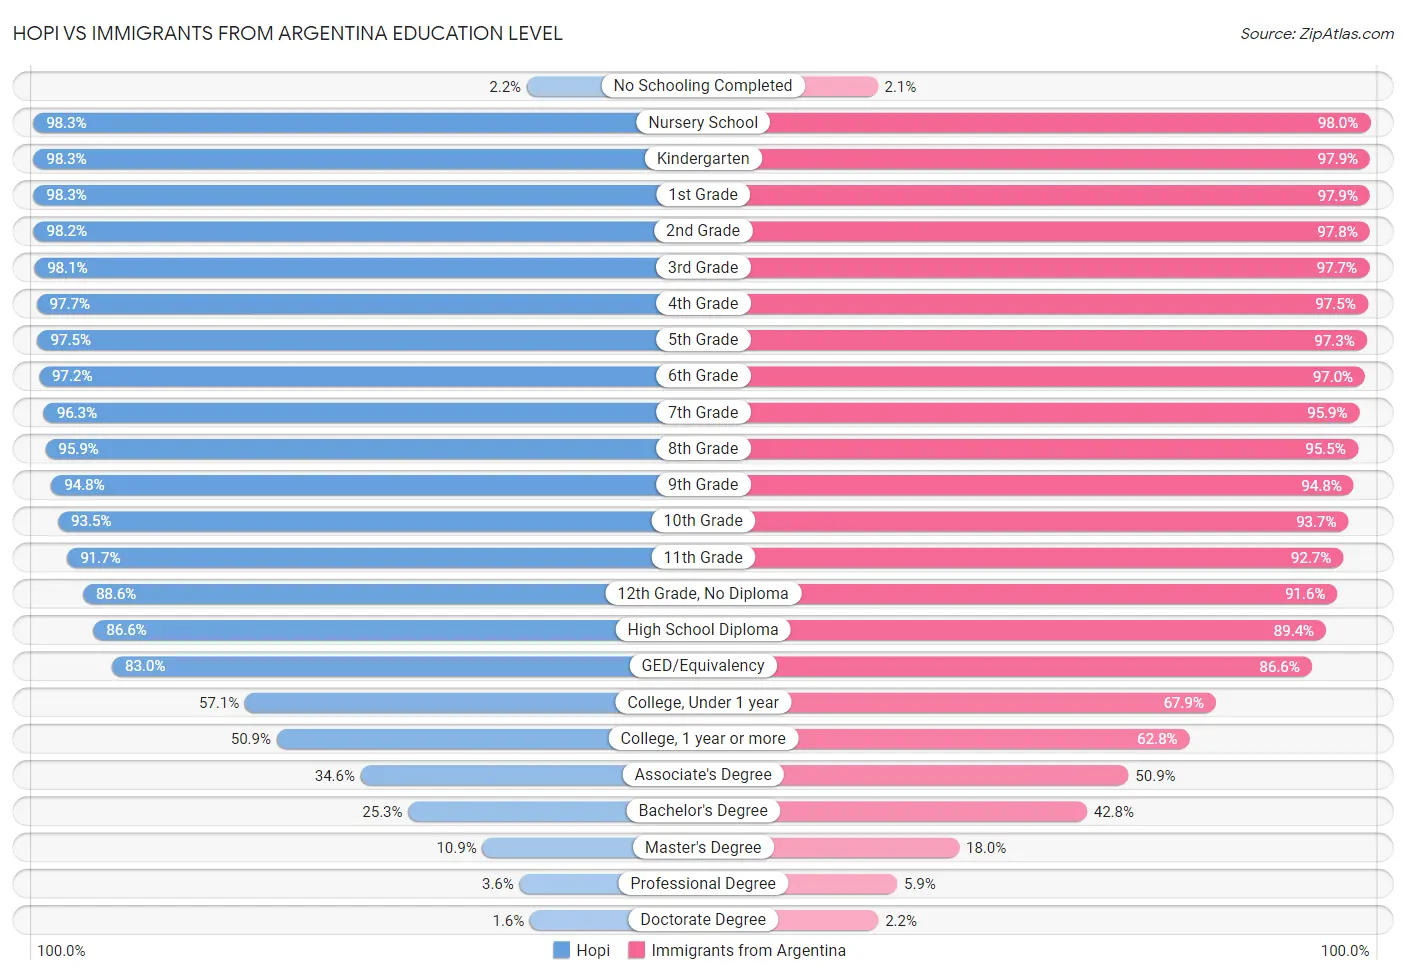 Hopi vs Immigrants from Argentina Education Level